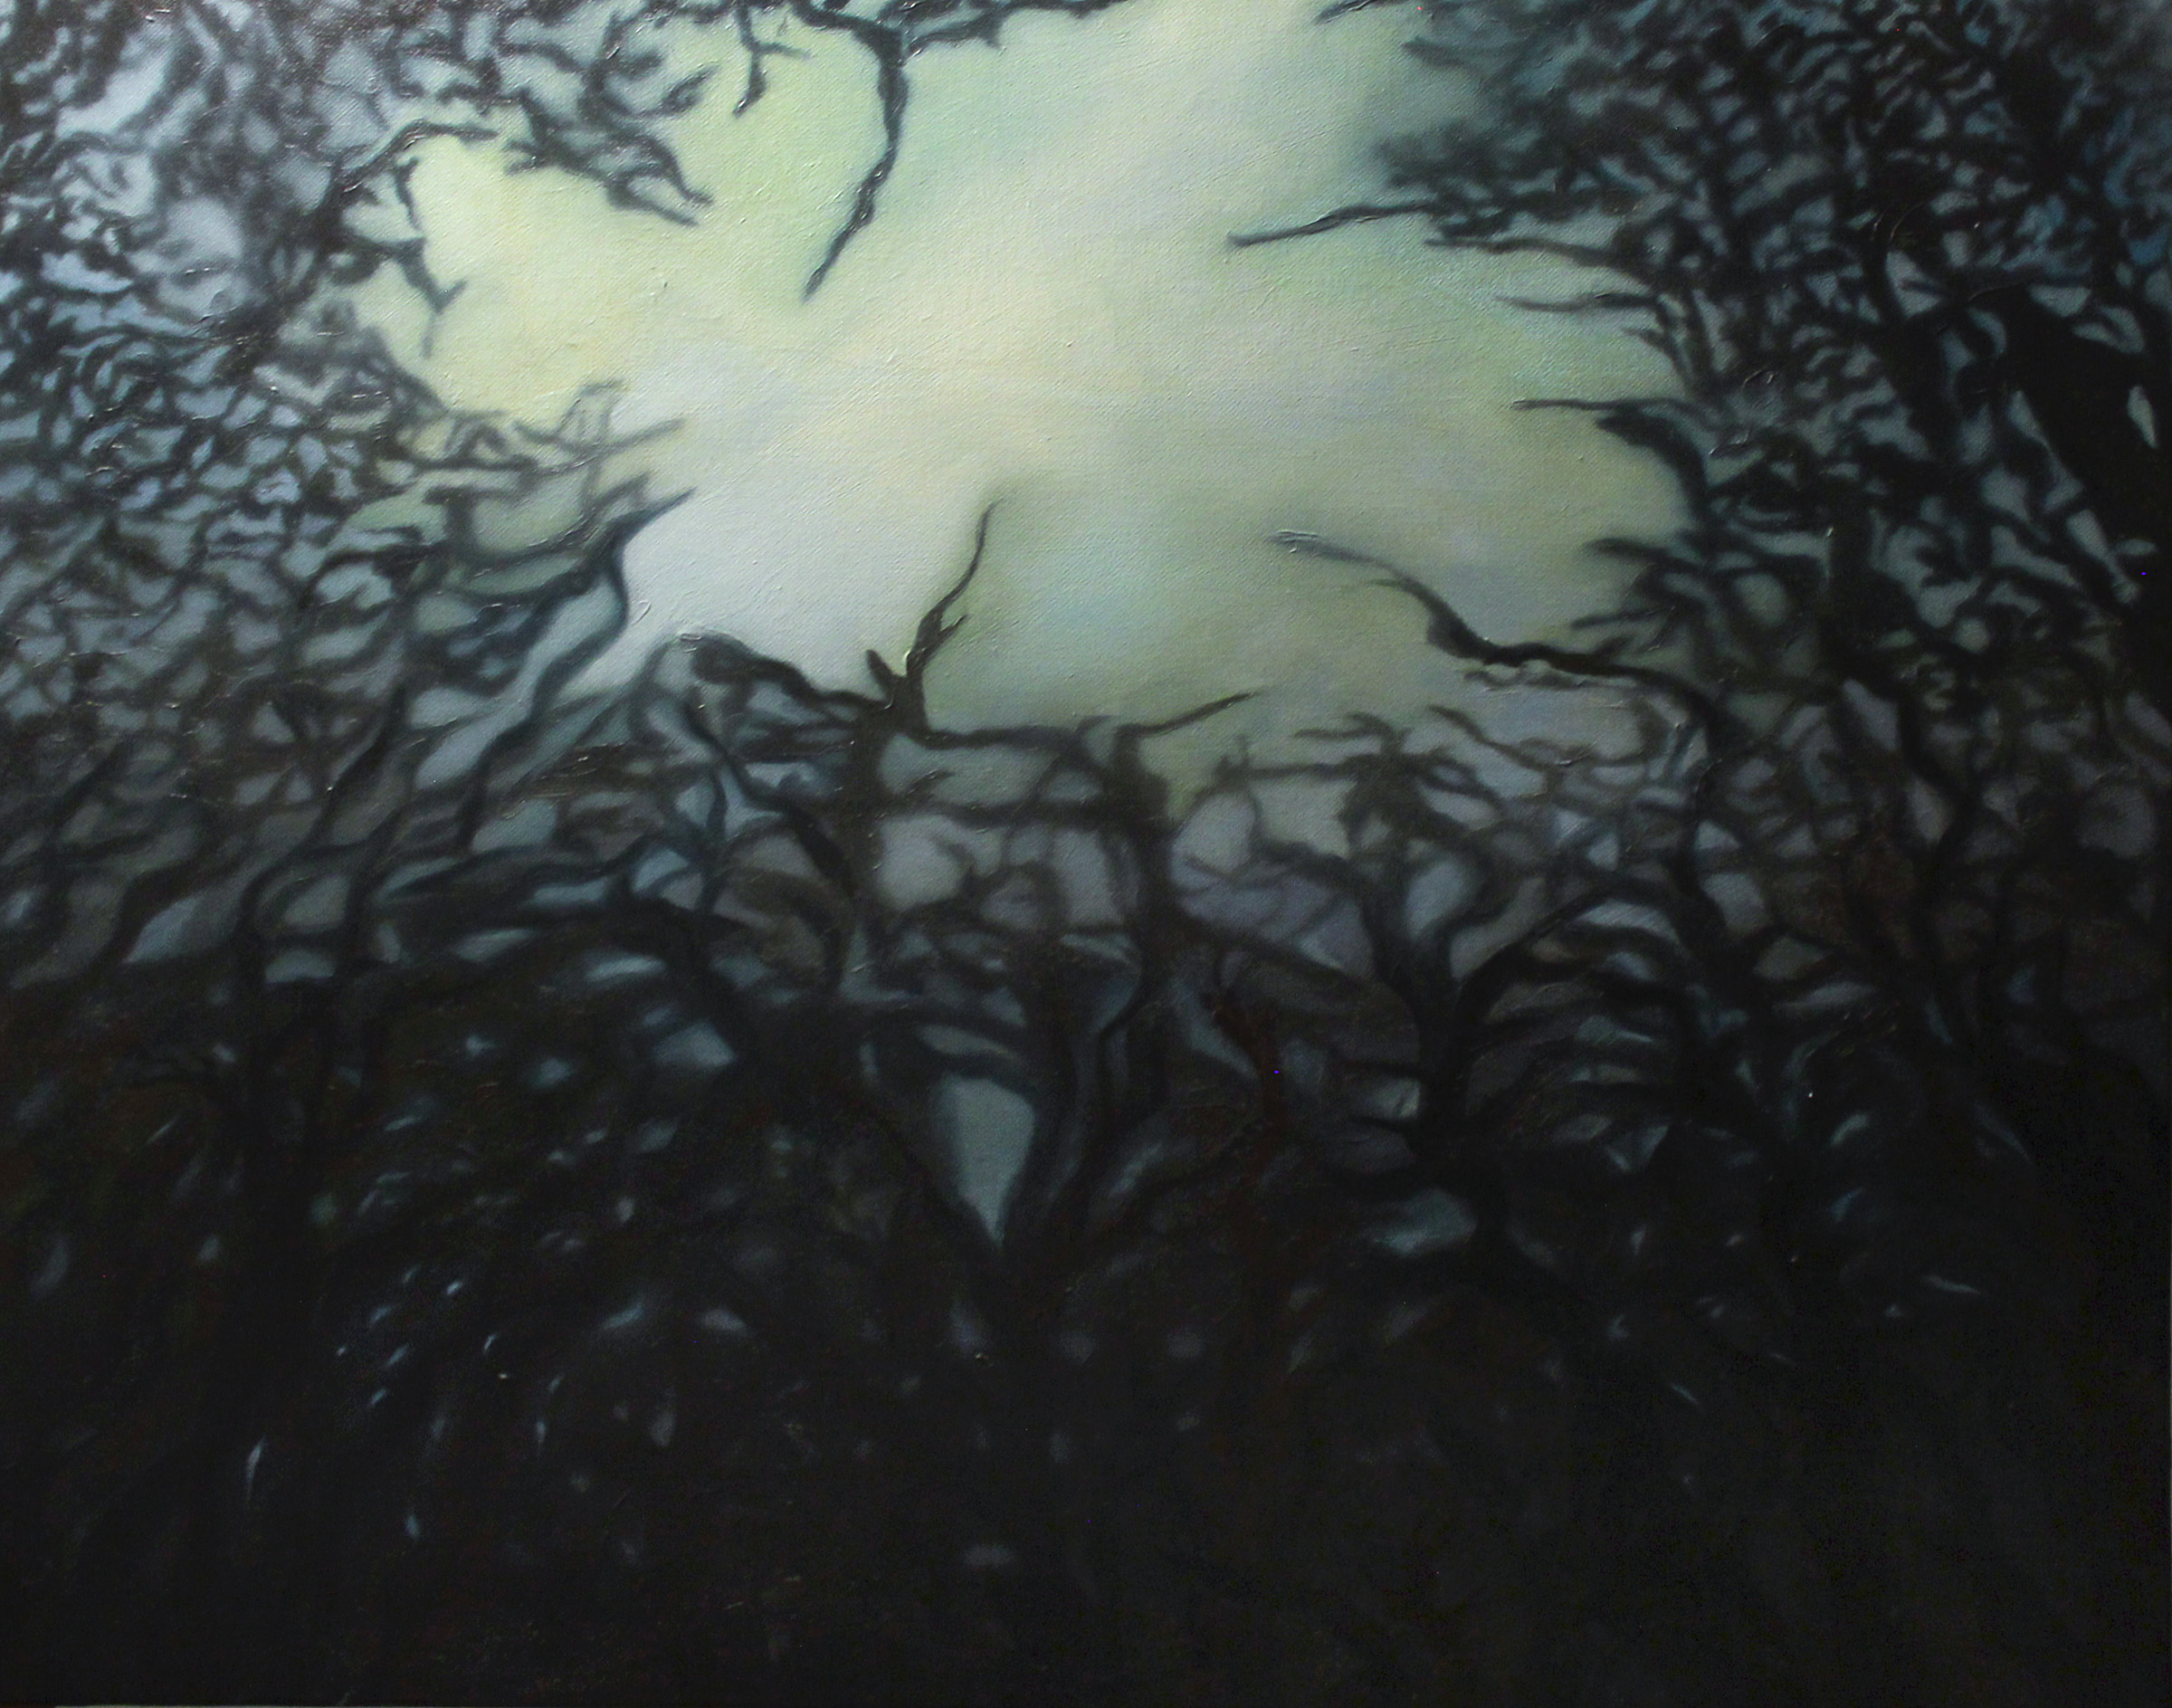 Hammock View, 2007, 22 x 28", oil on canvas